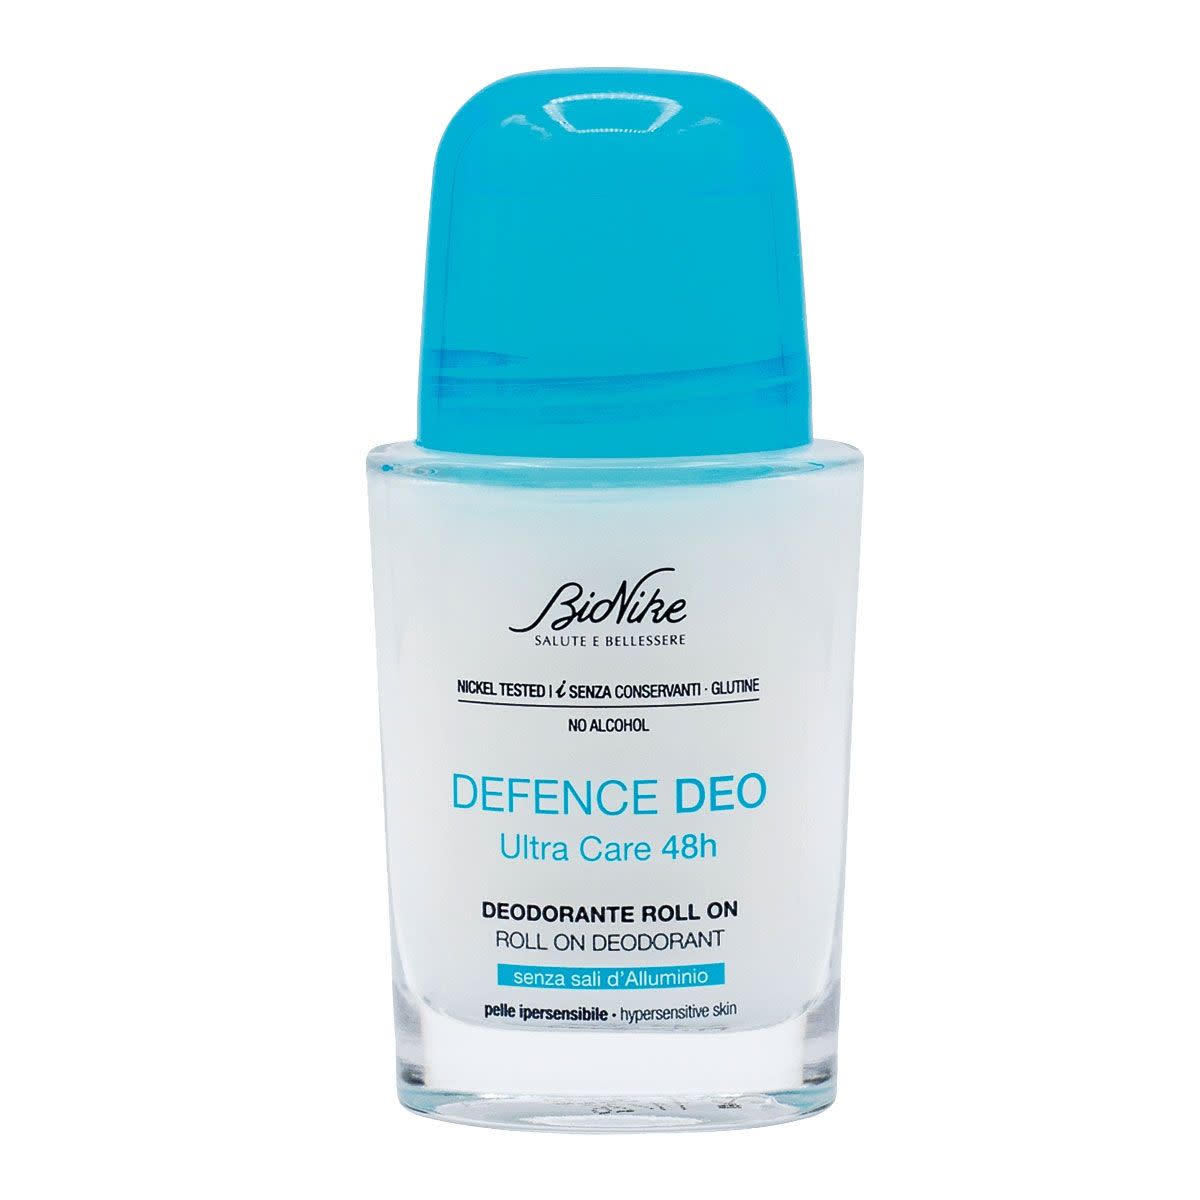 925223998 - Bionike Defence Deo Ultra Care 48h Deodorante Roll-on Senza Sali d'alluminio 50ml - 7880852_2.jpg